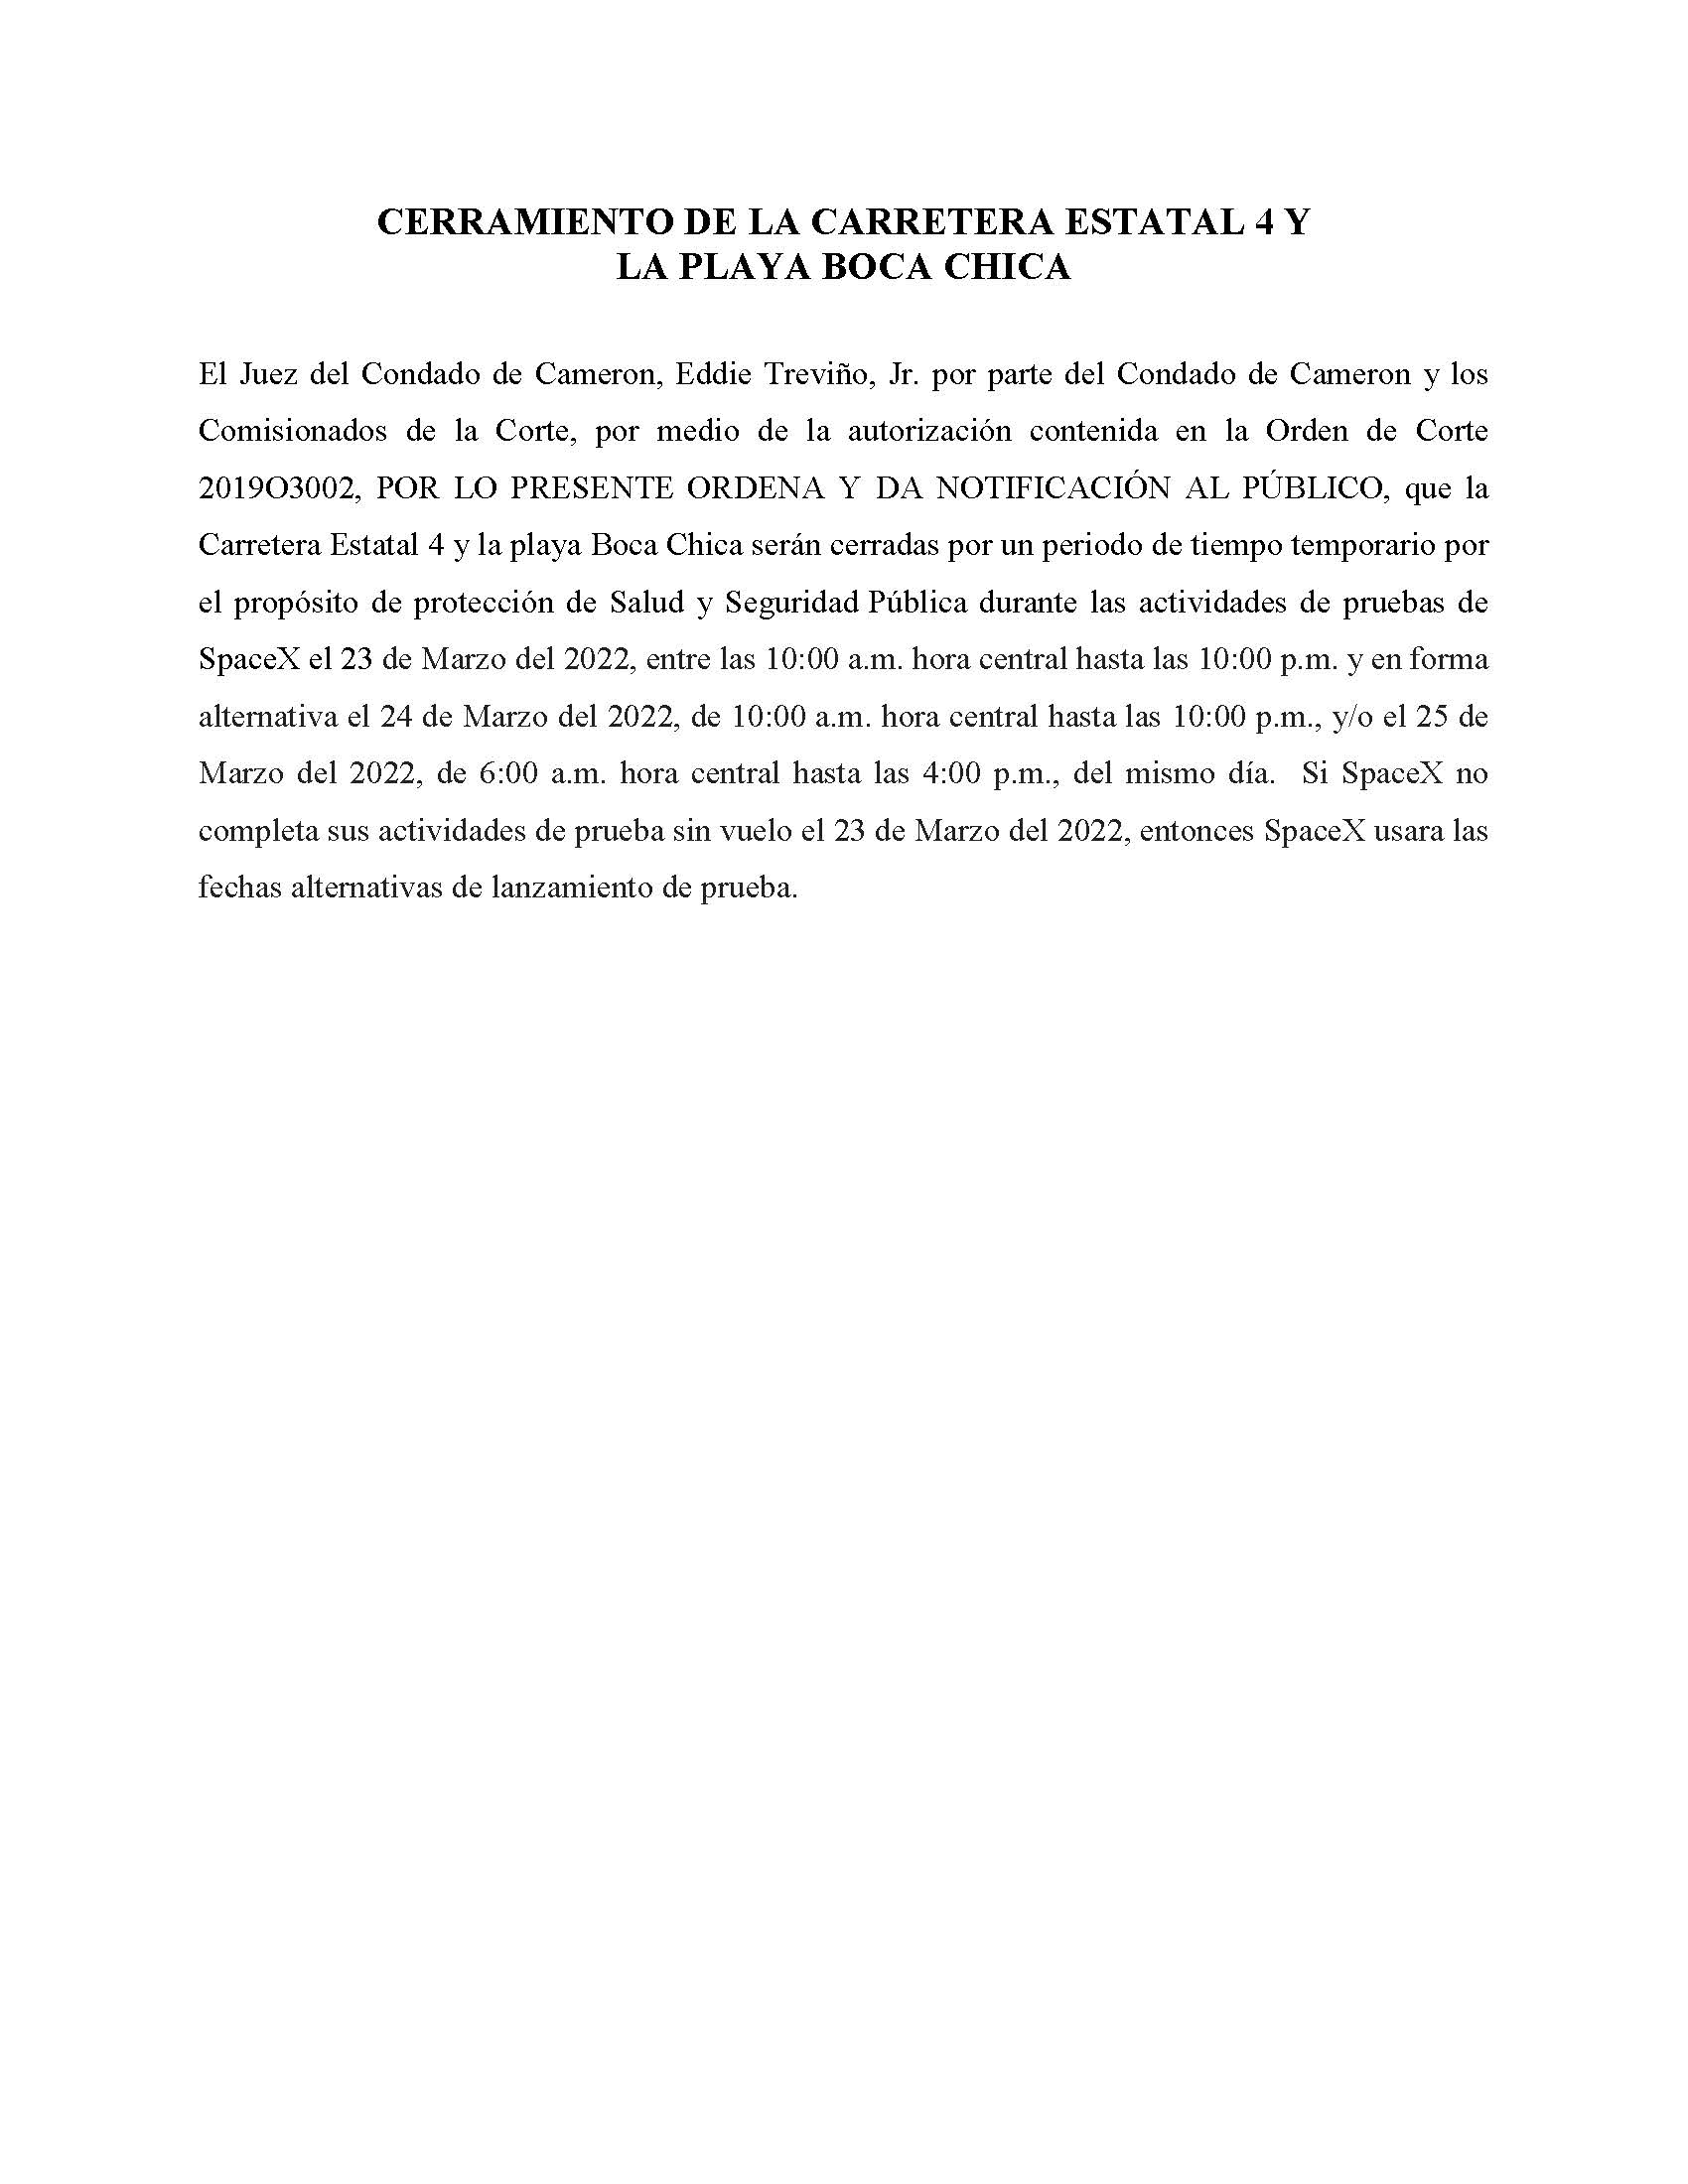 ORDER.CLOSURE OF HIGHWAY 4 Y LA PLAYA BOCA CHICA.SPANISH.03.23.2022